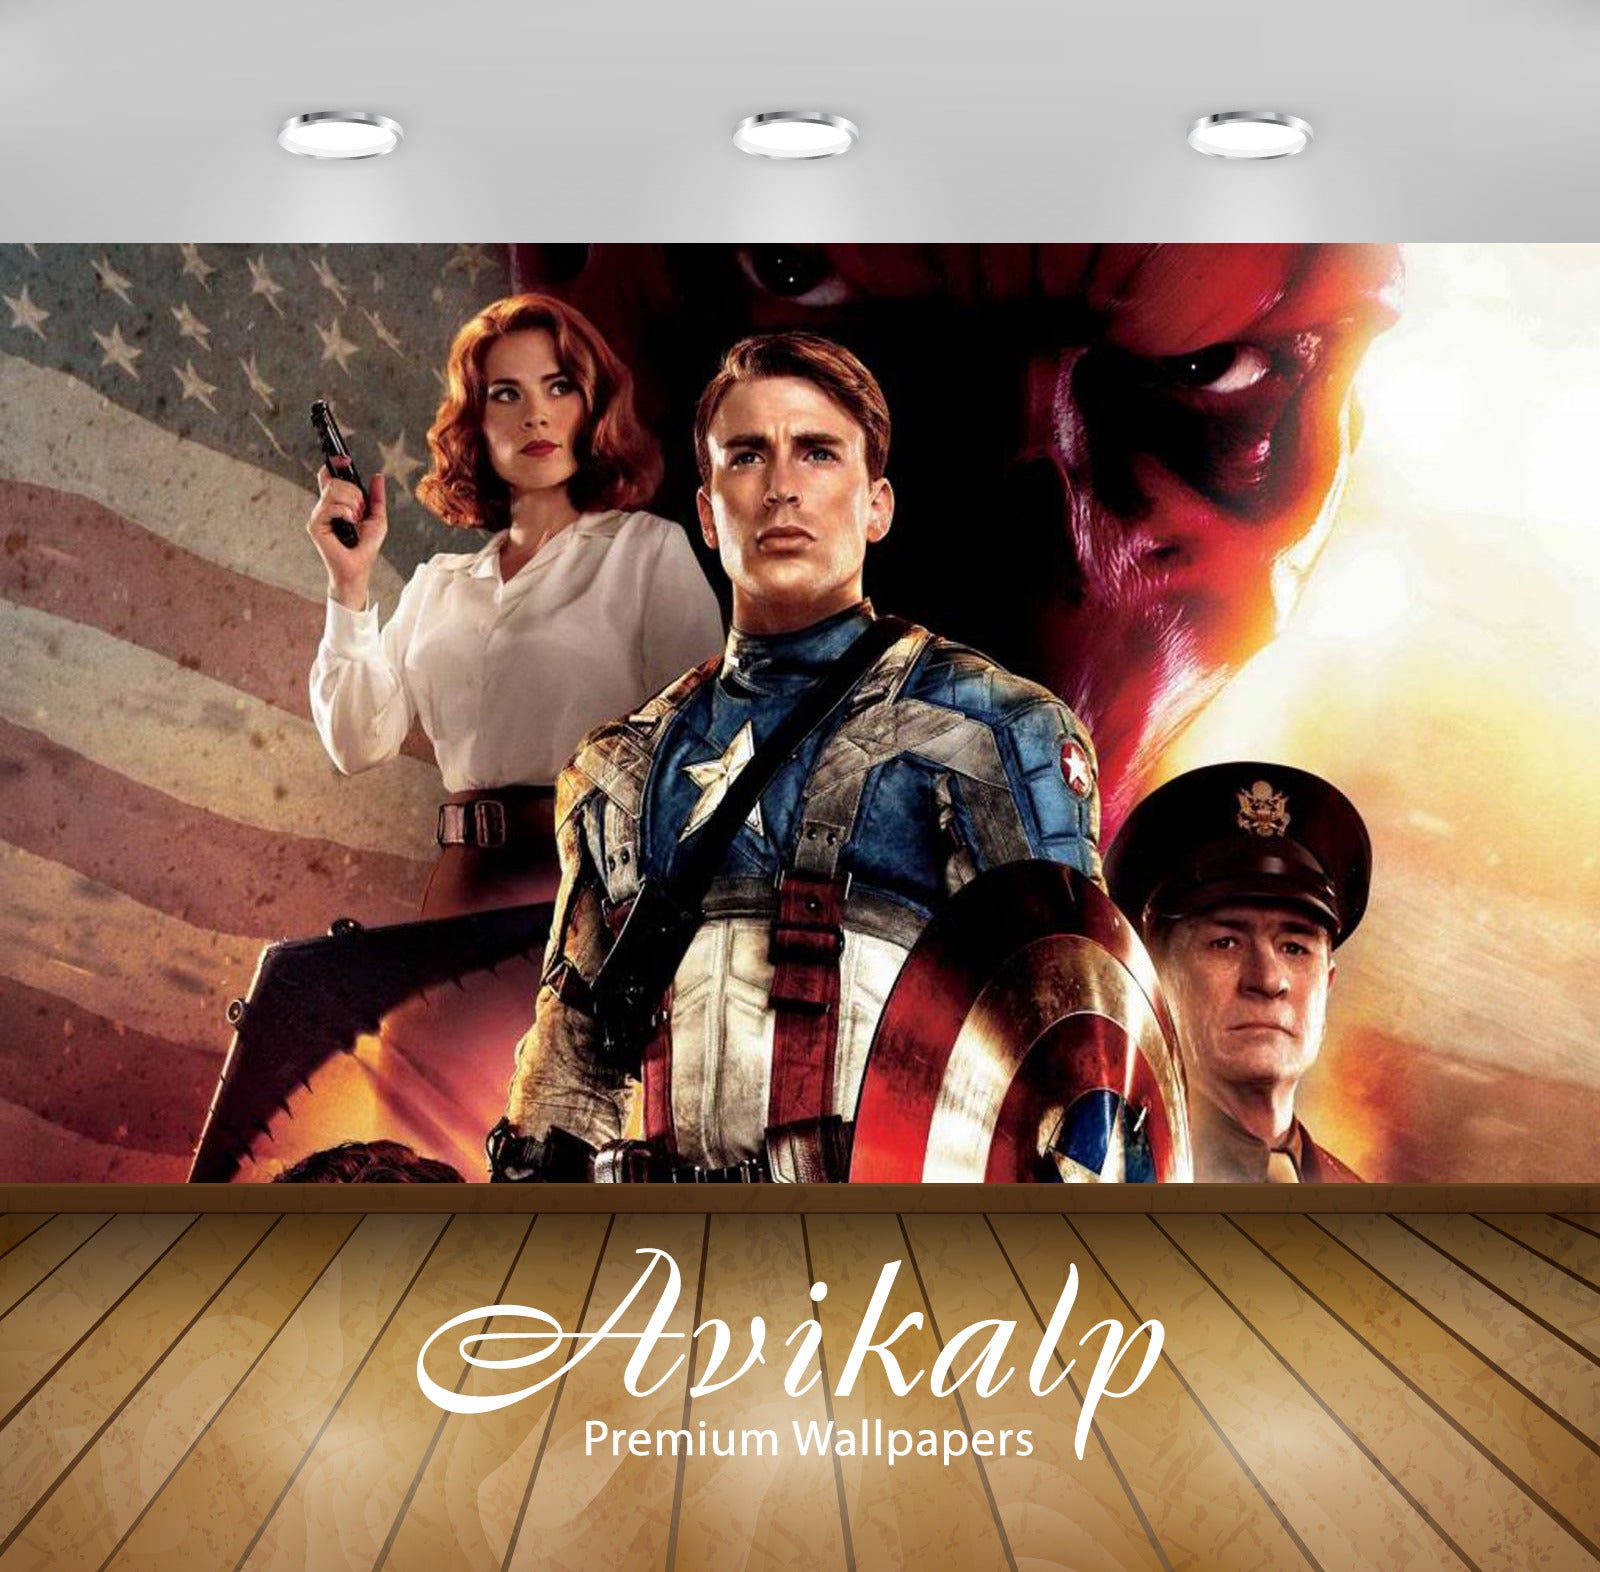 Avikalp Exclusive Awi2504 Civil War Captain America Chris Evans Full HD Wallpapers for Living room,